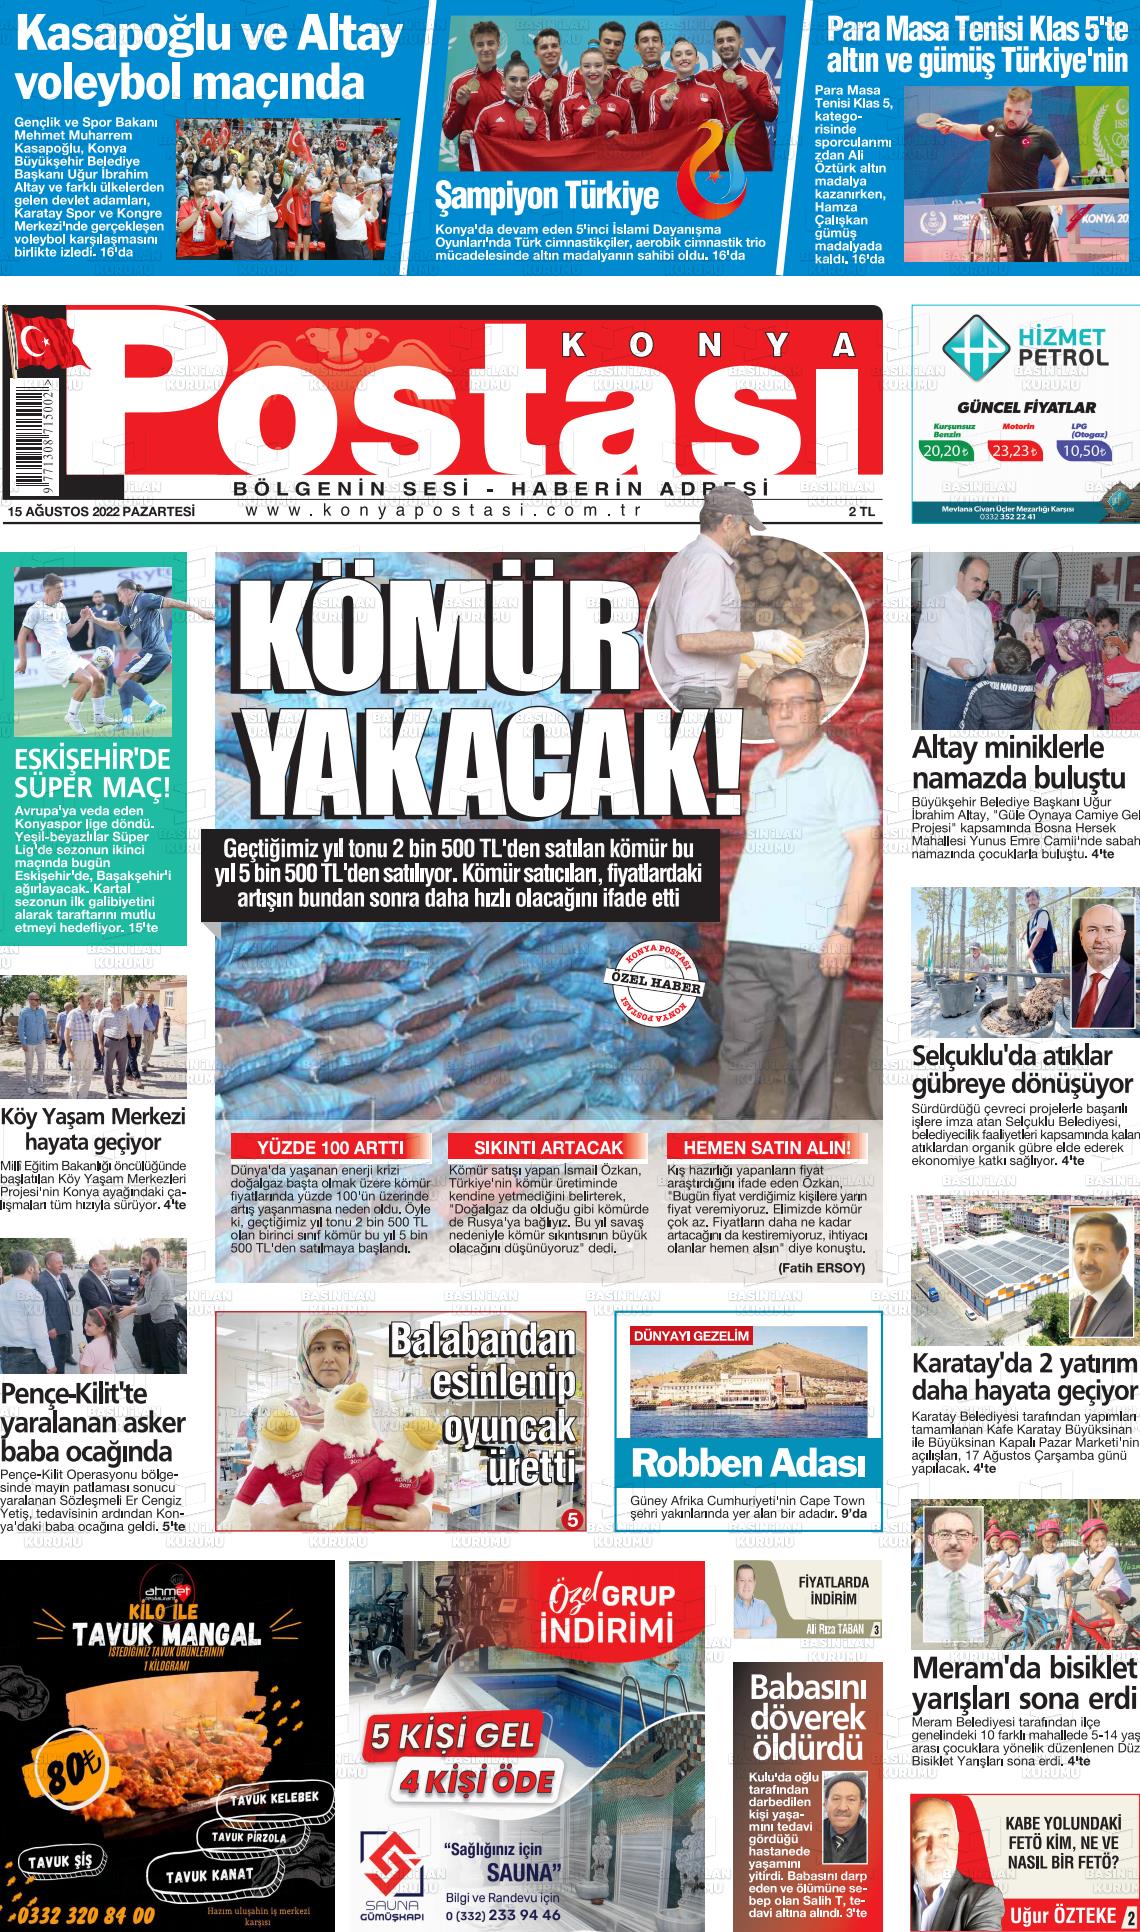 15 Ağustos 2022 Konya Postası Gazete Manşeti